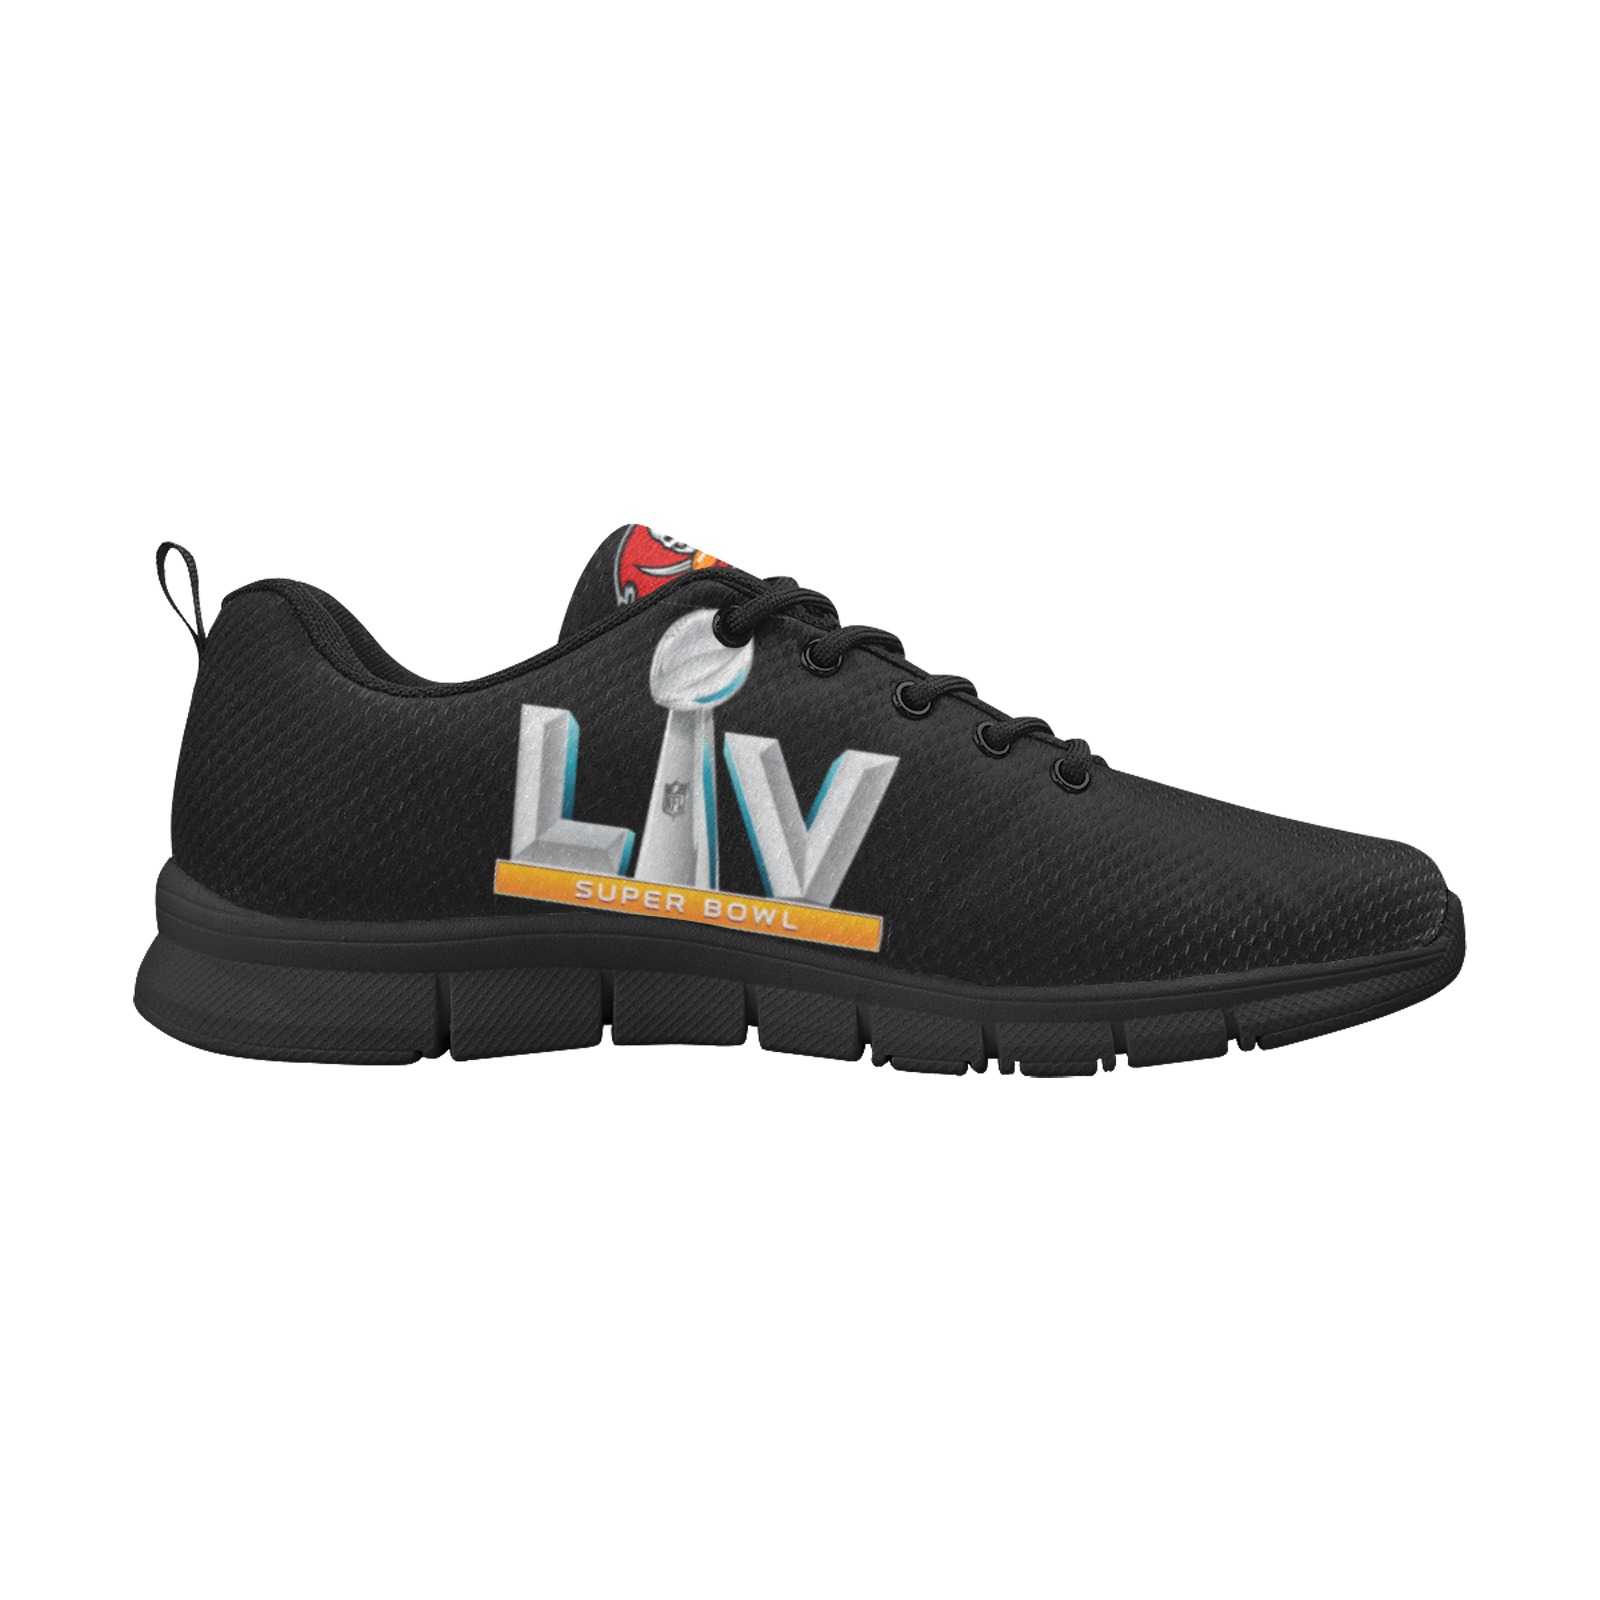 LV Tampa Bay Superbowl Shoes Men's Breathable Running Shoes (Model 055)